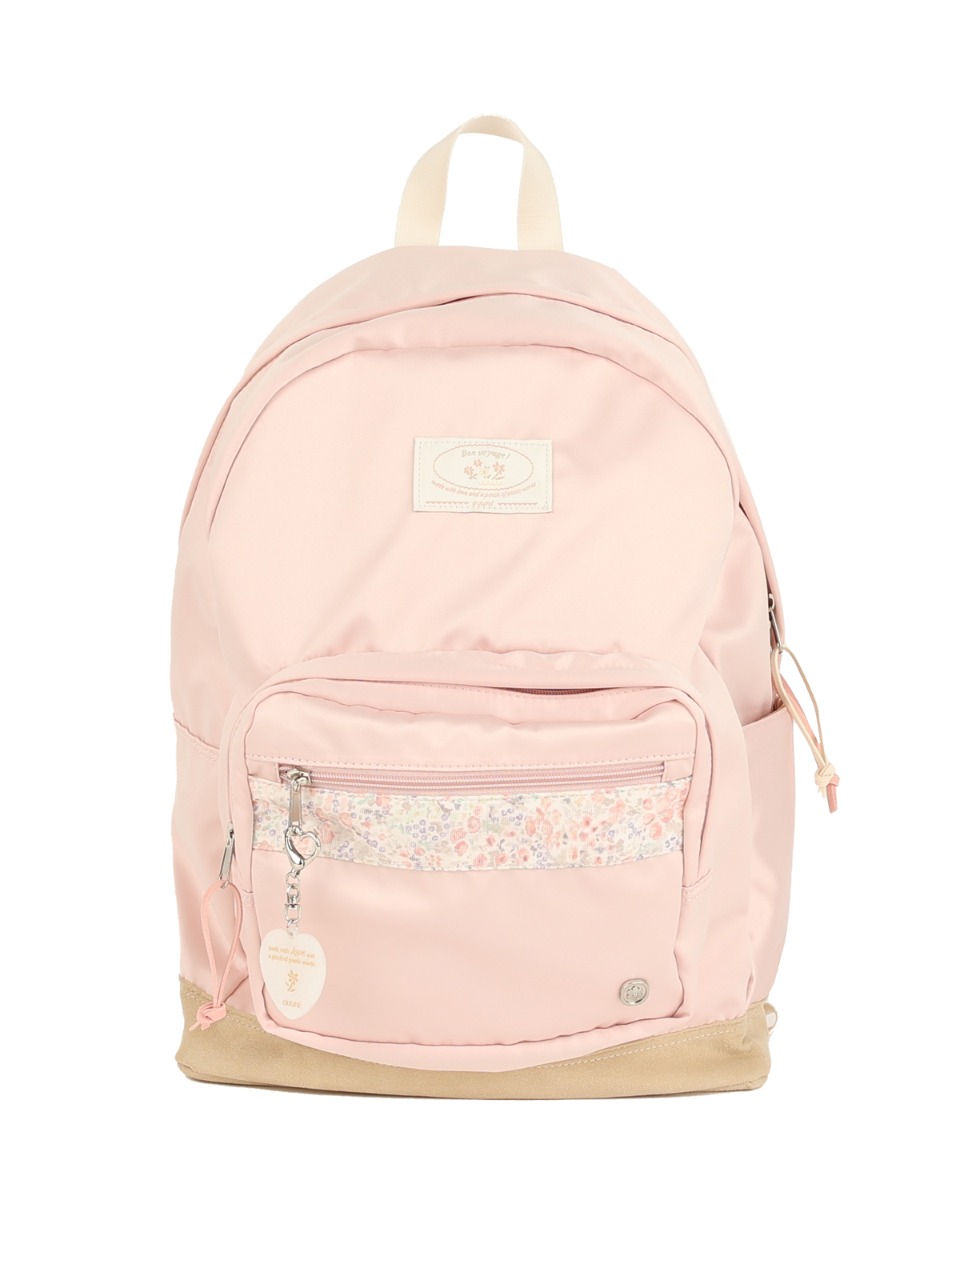 Bon voyage backpack - powder pink - ovuni